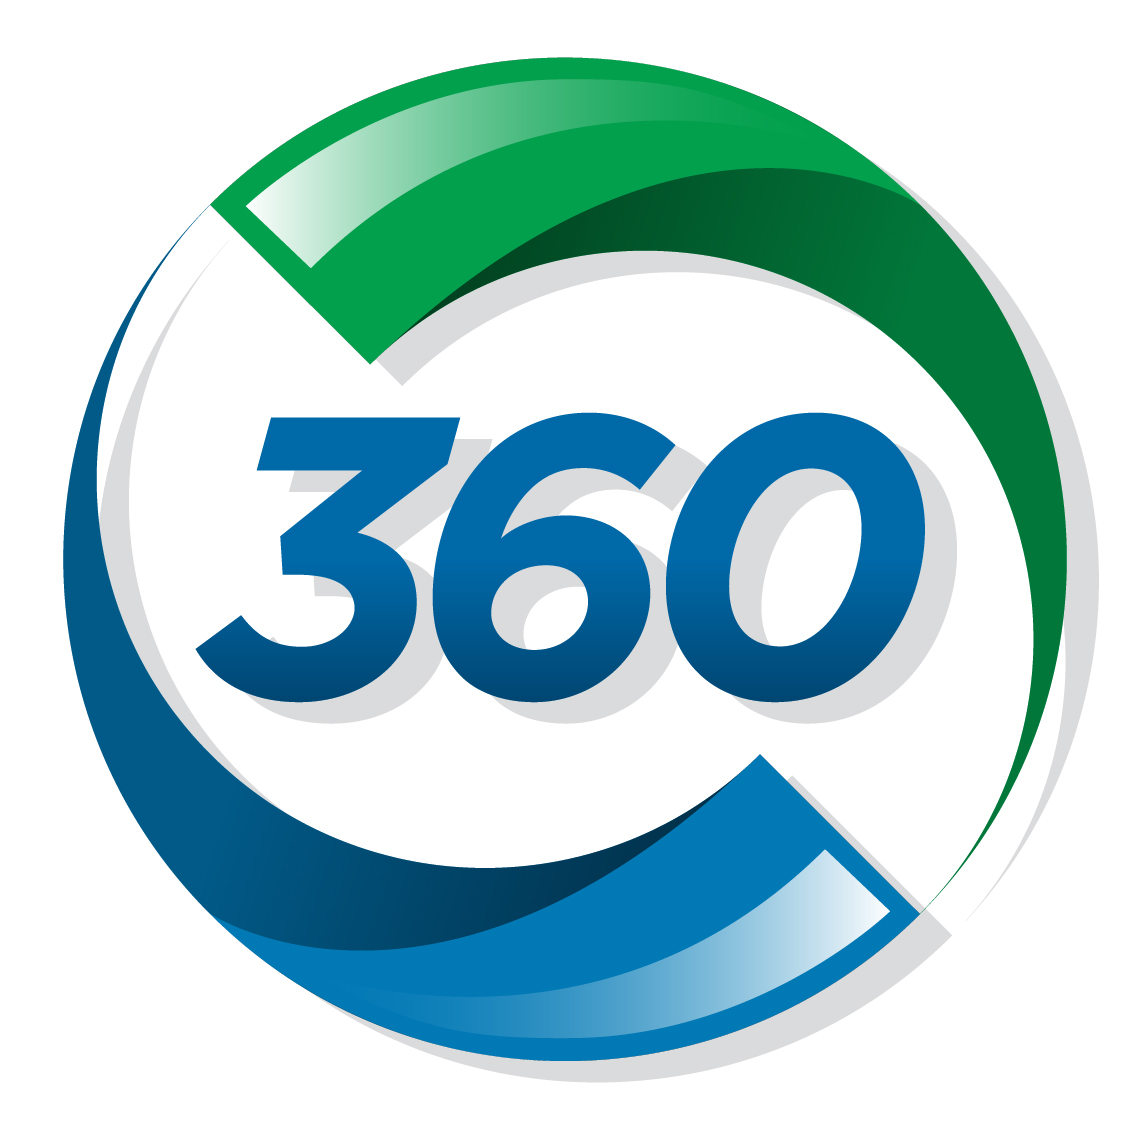 360tv. Значок 360. Логотип 360 градусов. VR 360 лого. Знак панорамы 360.